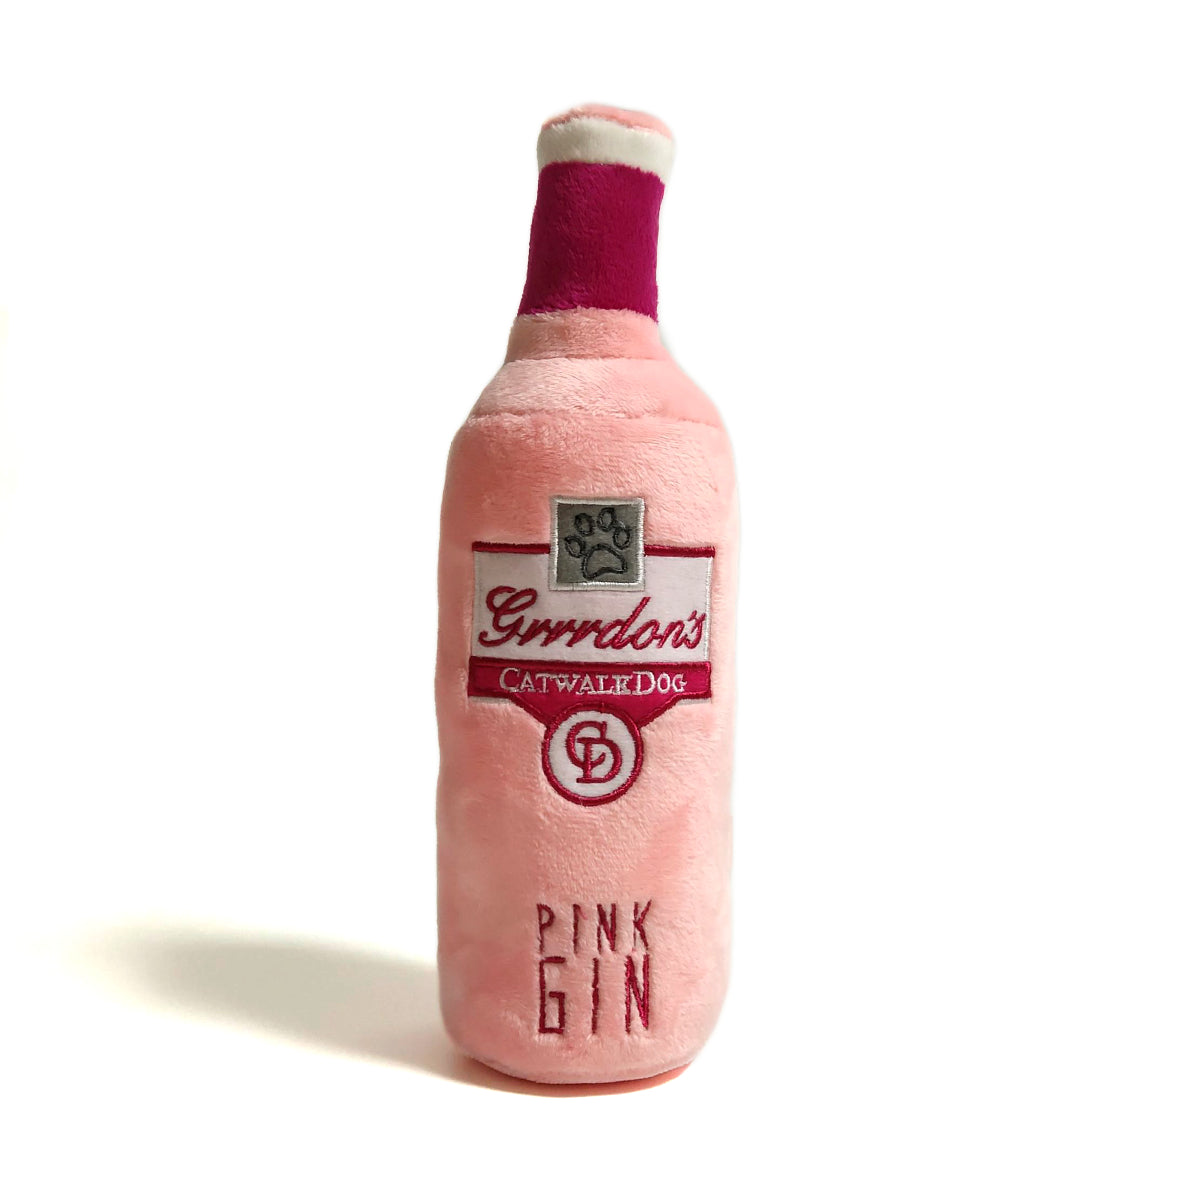 Grrrdon's Pink Gin Bottle Plush Dog Toy